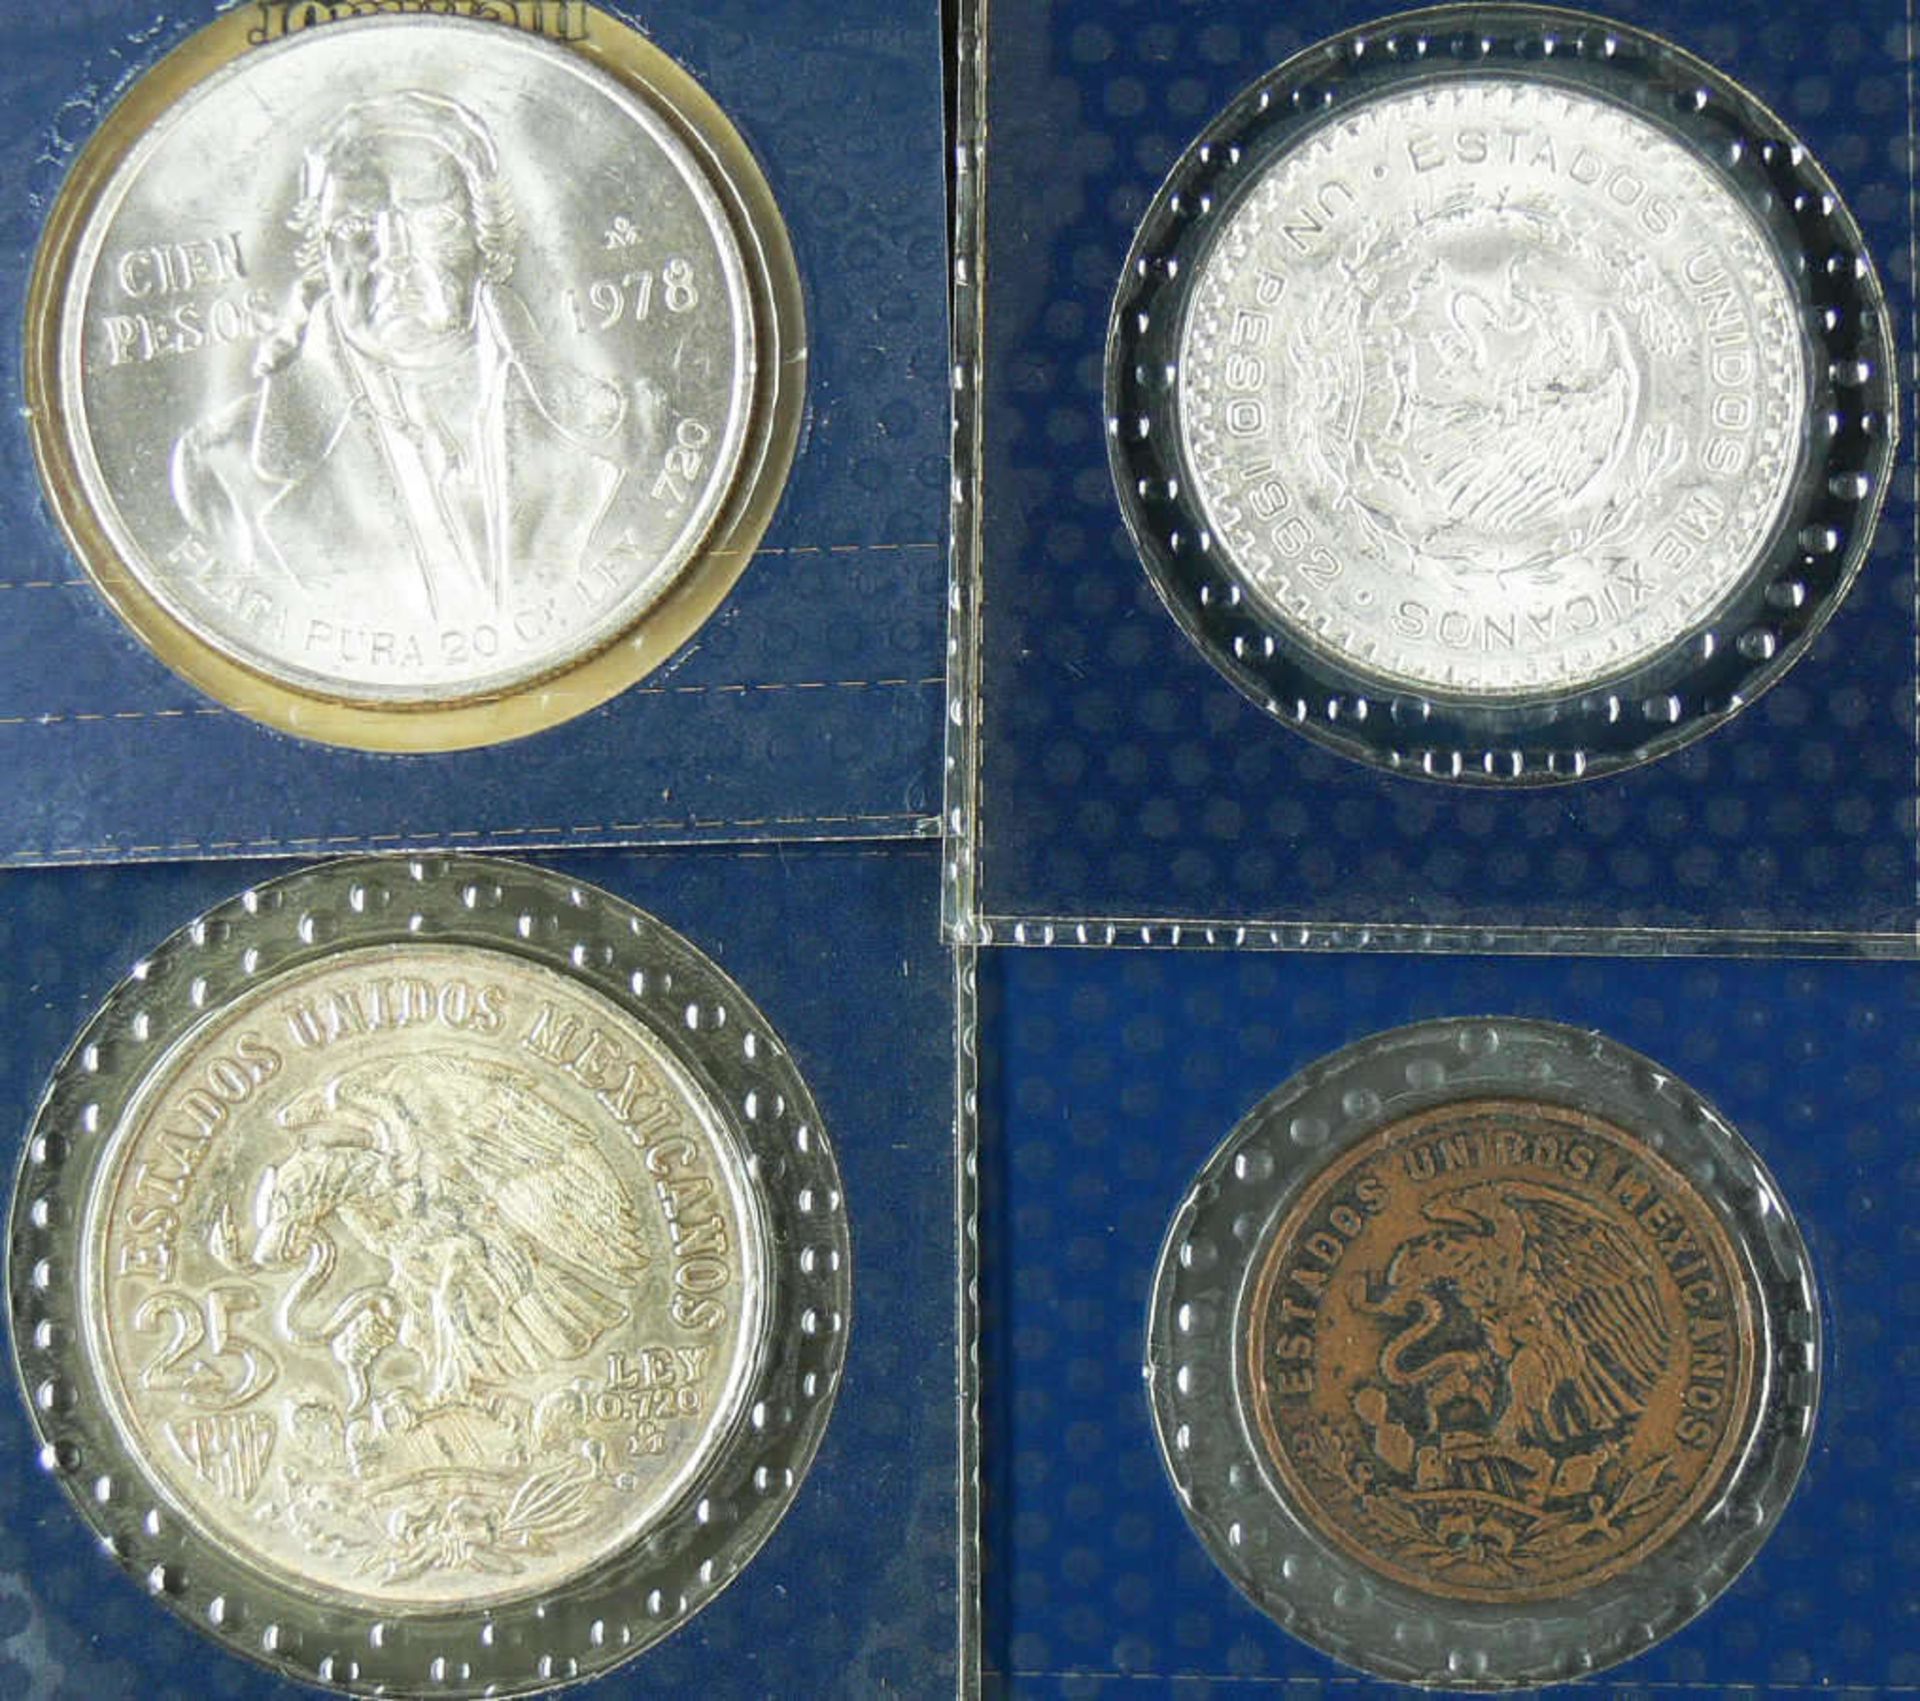 Mexico 1962 - 78, Lot aus vier Münzen, bestehend aus: 1. 1978 100 Pesos - Silbermünze, 1968 25 Pesos - Image 2 of 2